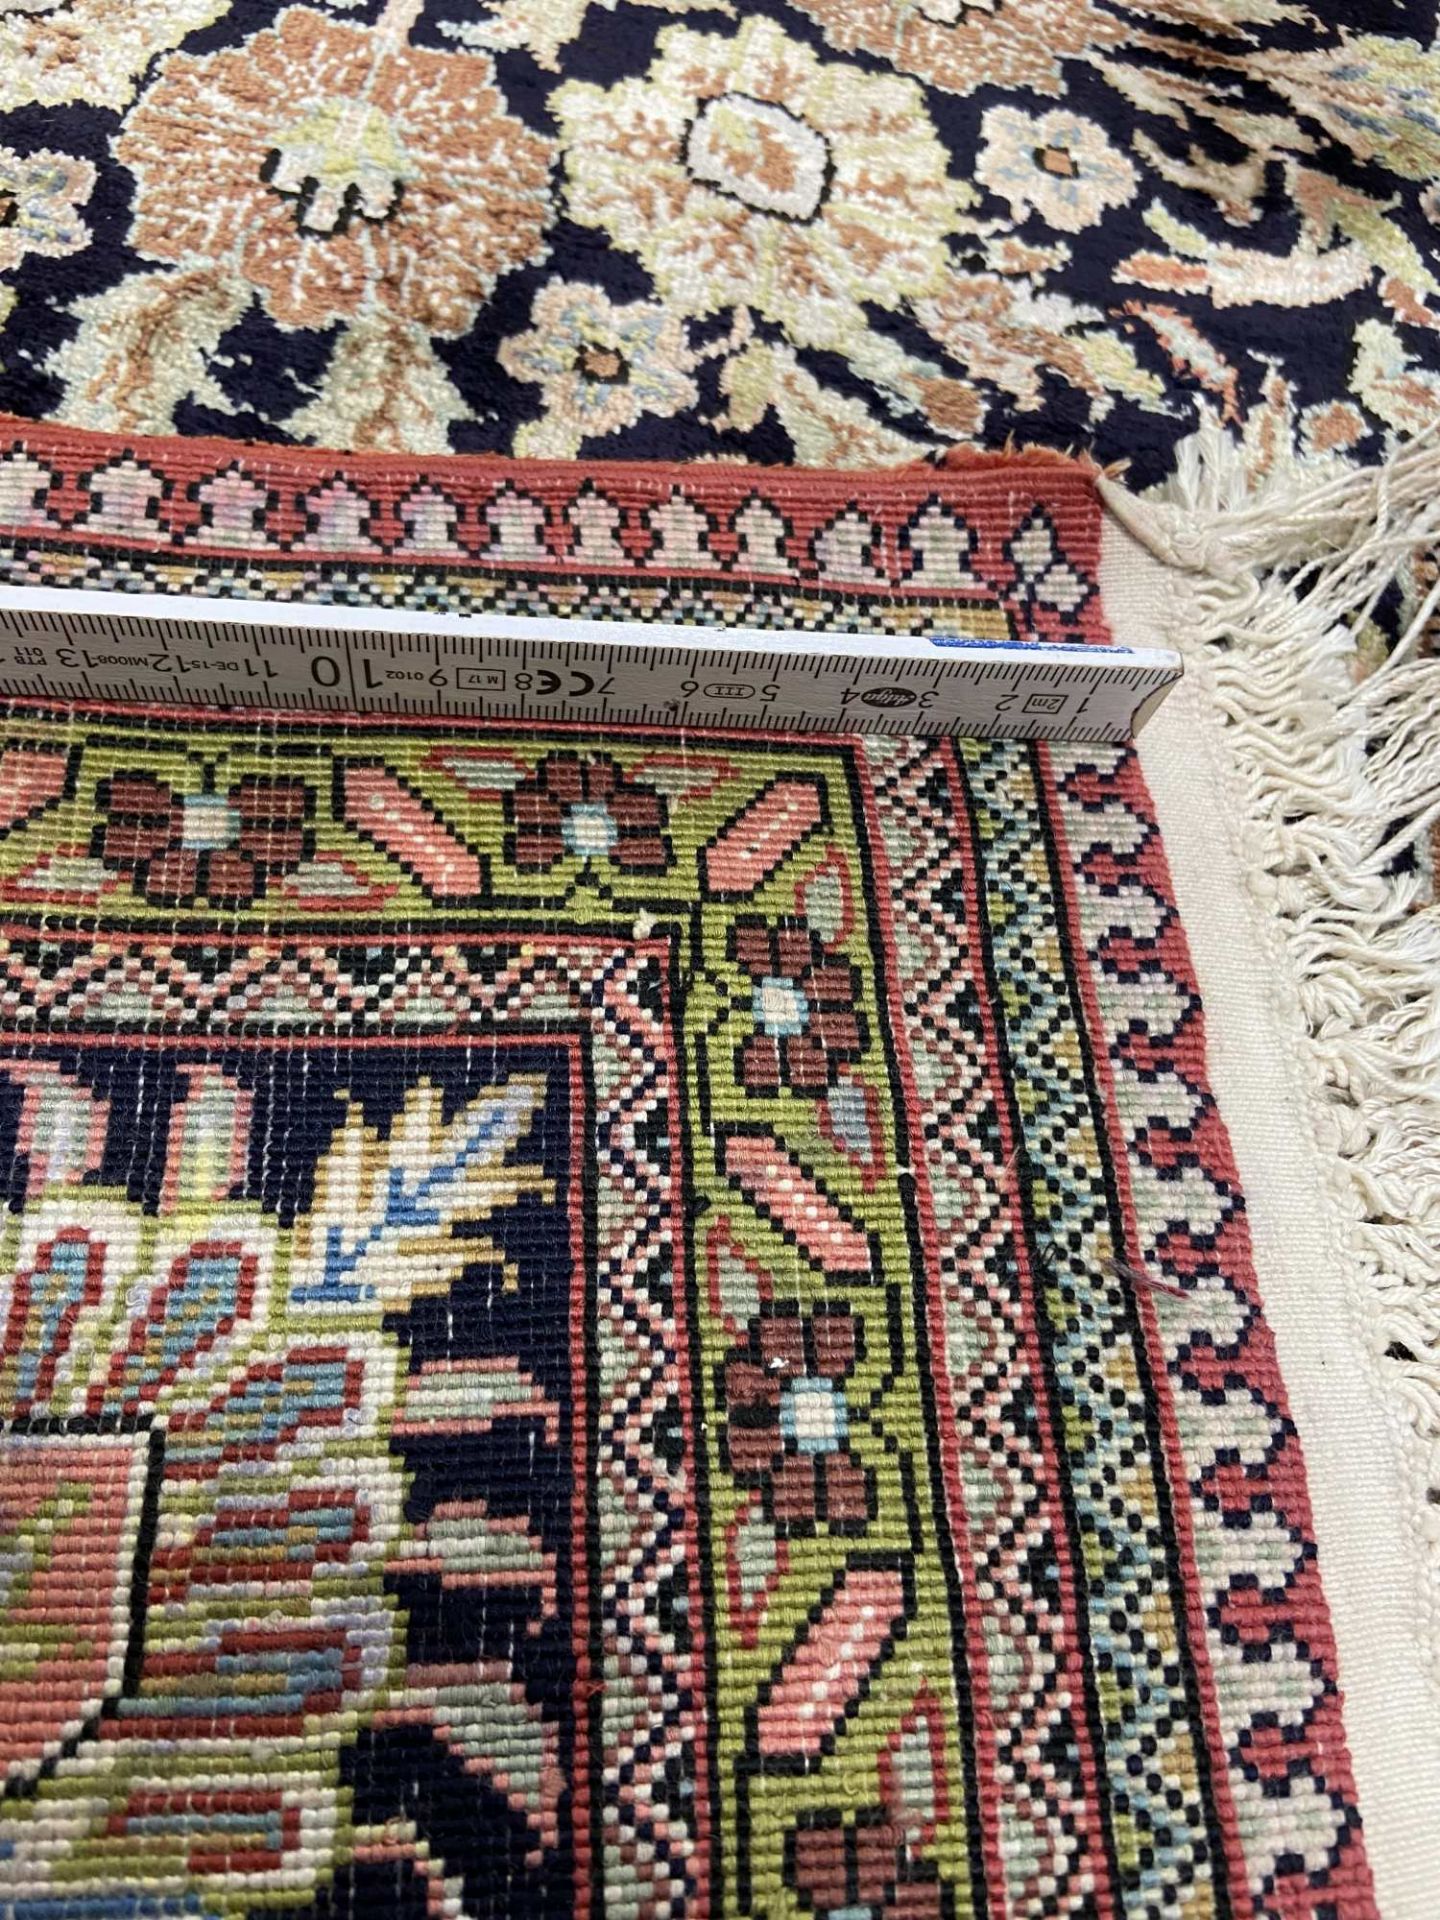 Handknotted oriental silk carpet, Kashmir - 250 x 155cm - Image 4 of 4